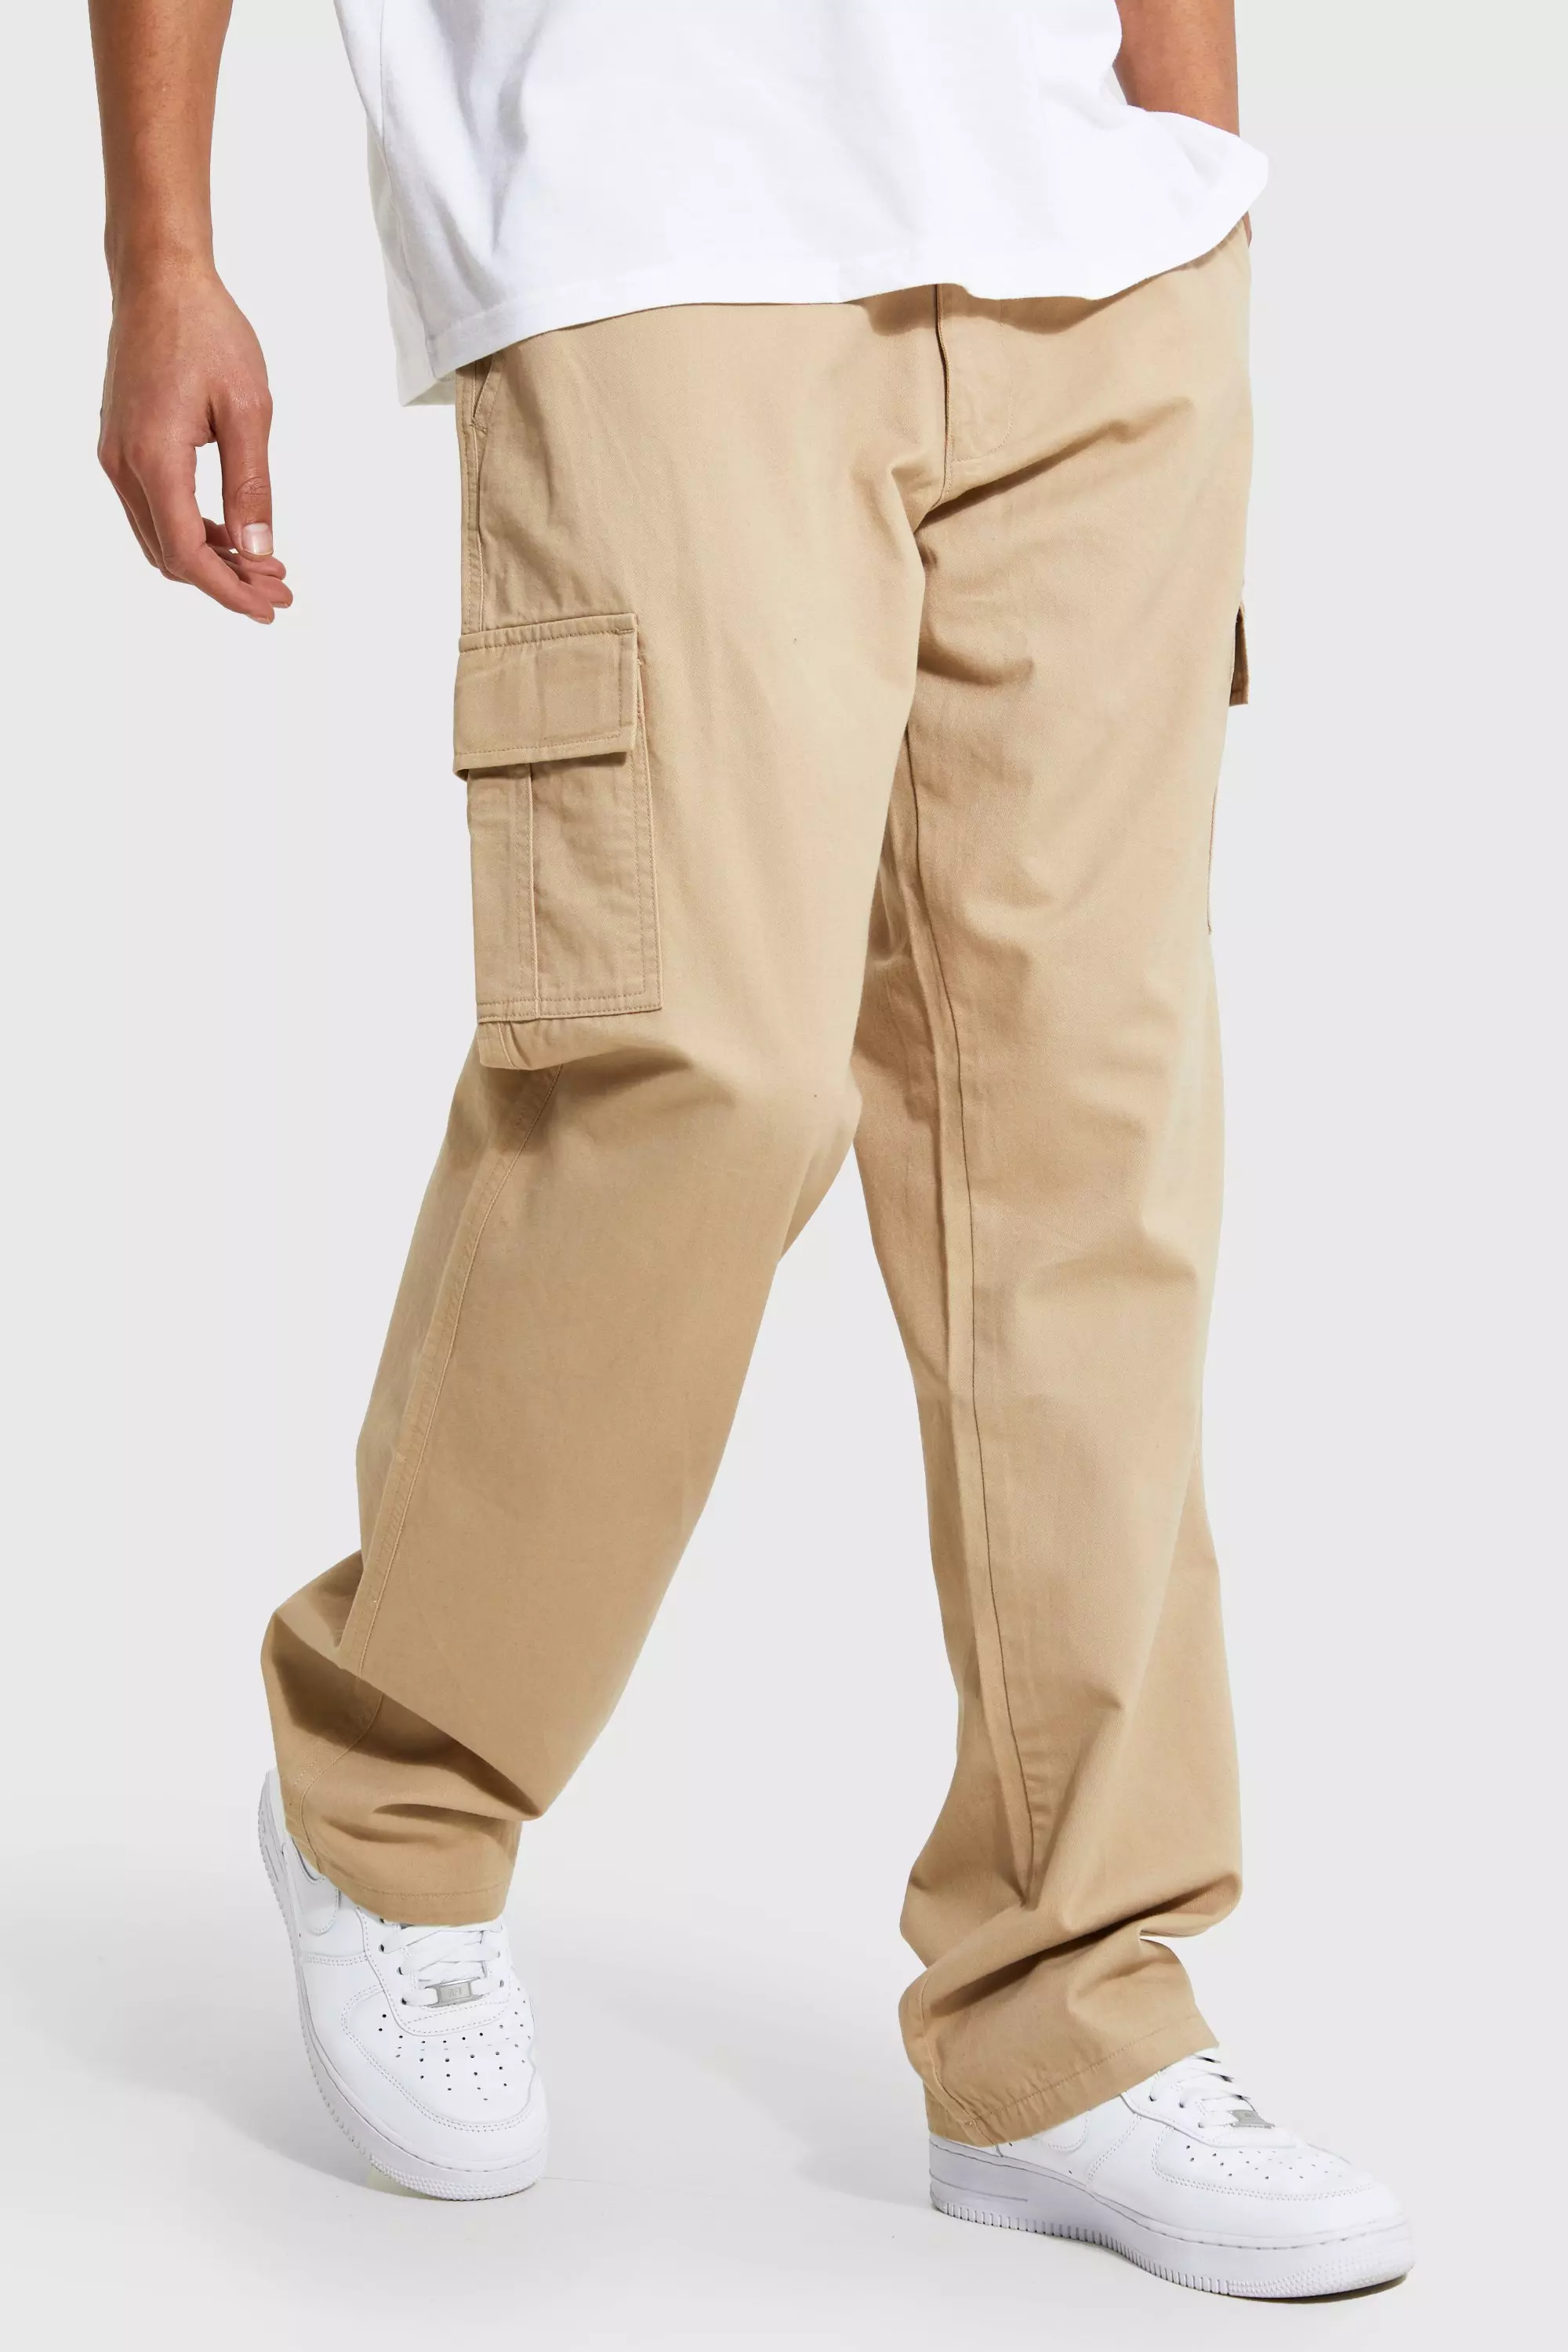 Men's Beige Cargo Trousers, Cream Cargo Pants